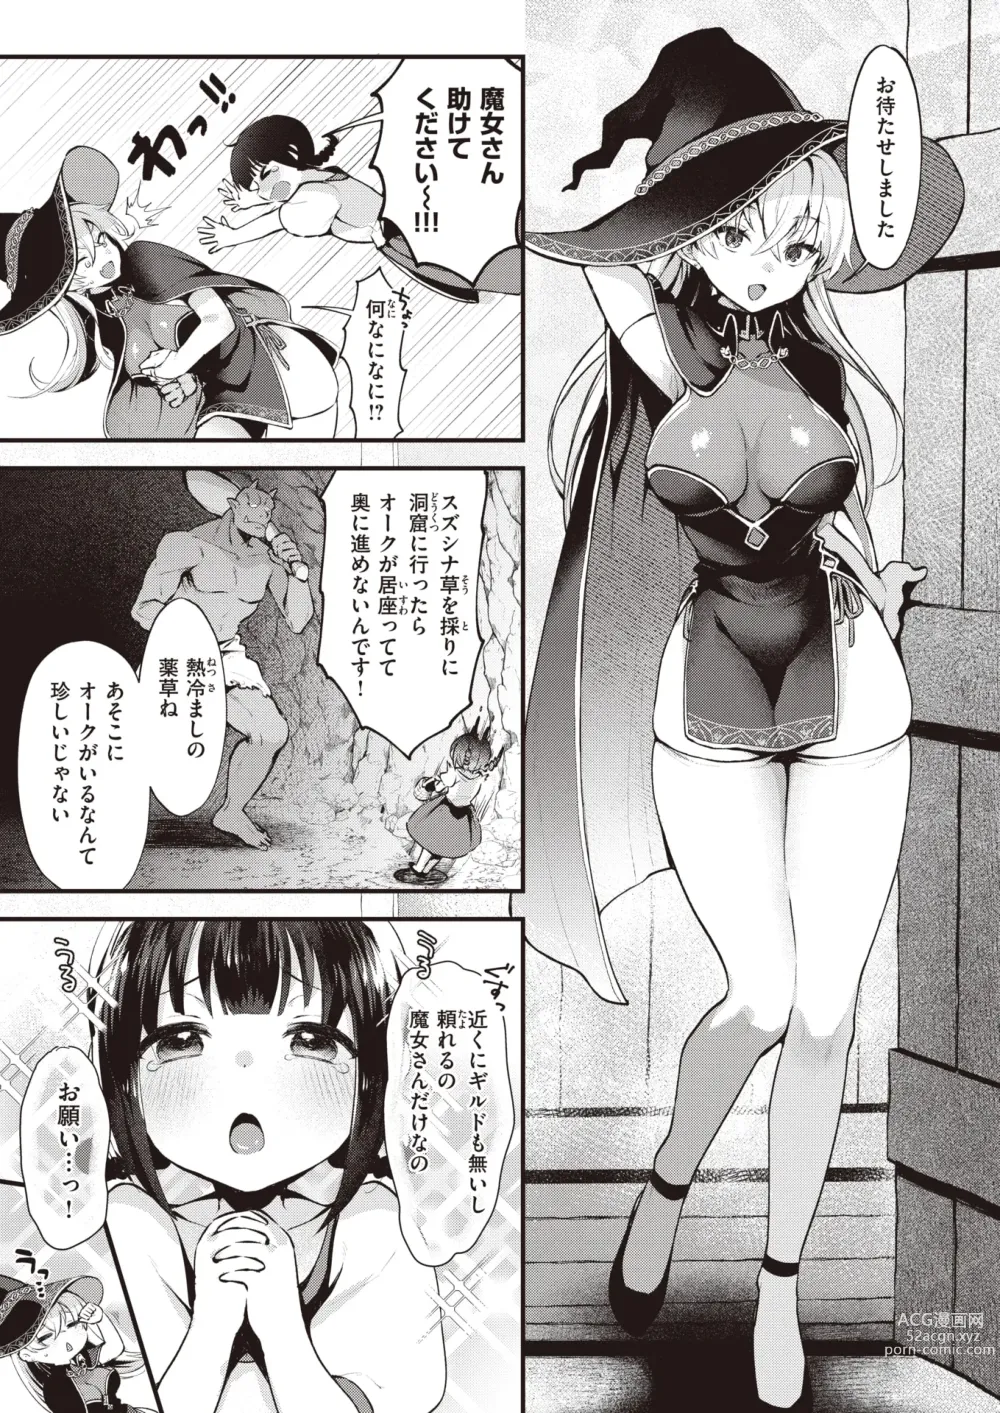 Page 4 of manga Isekai Rakuten Vol. 25